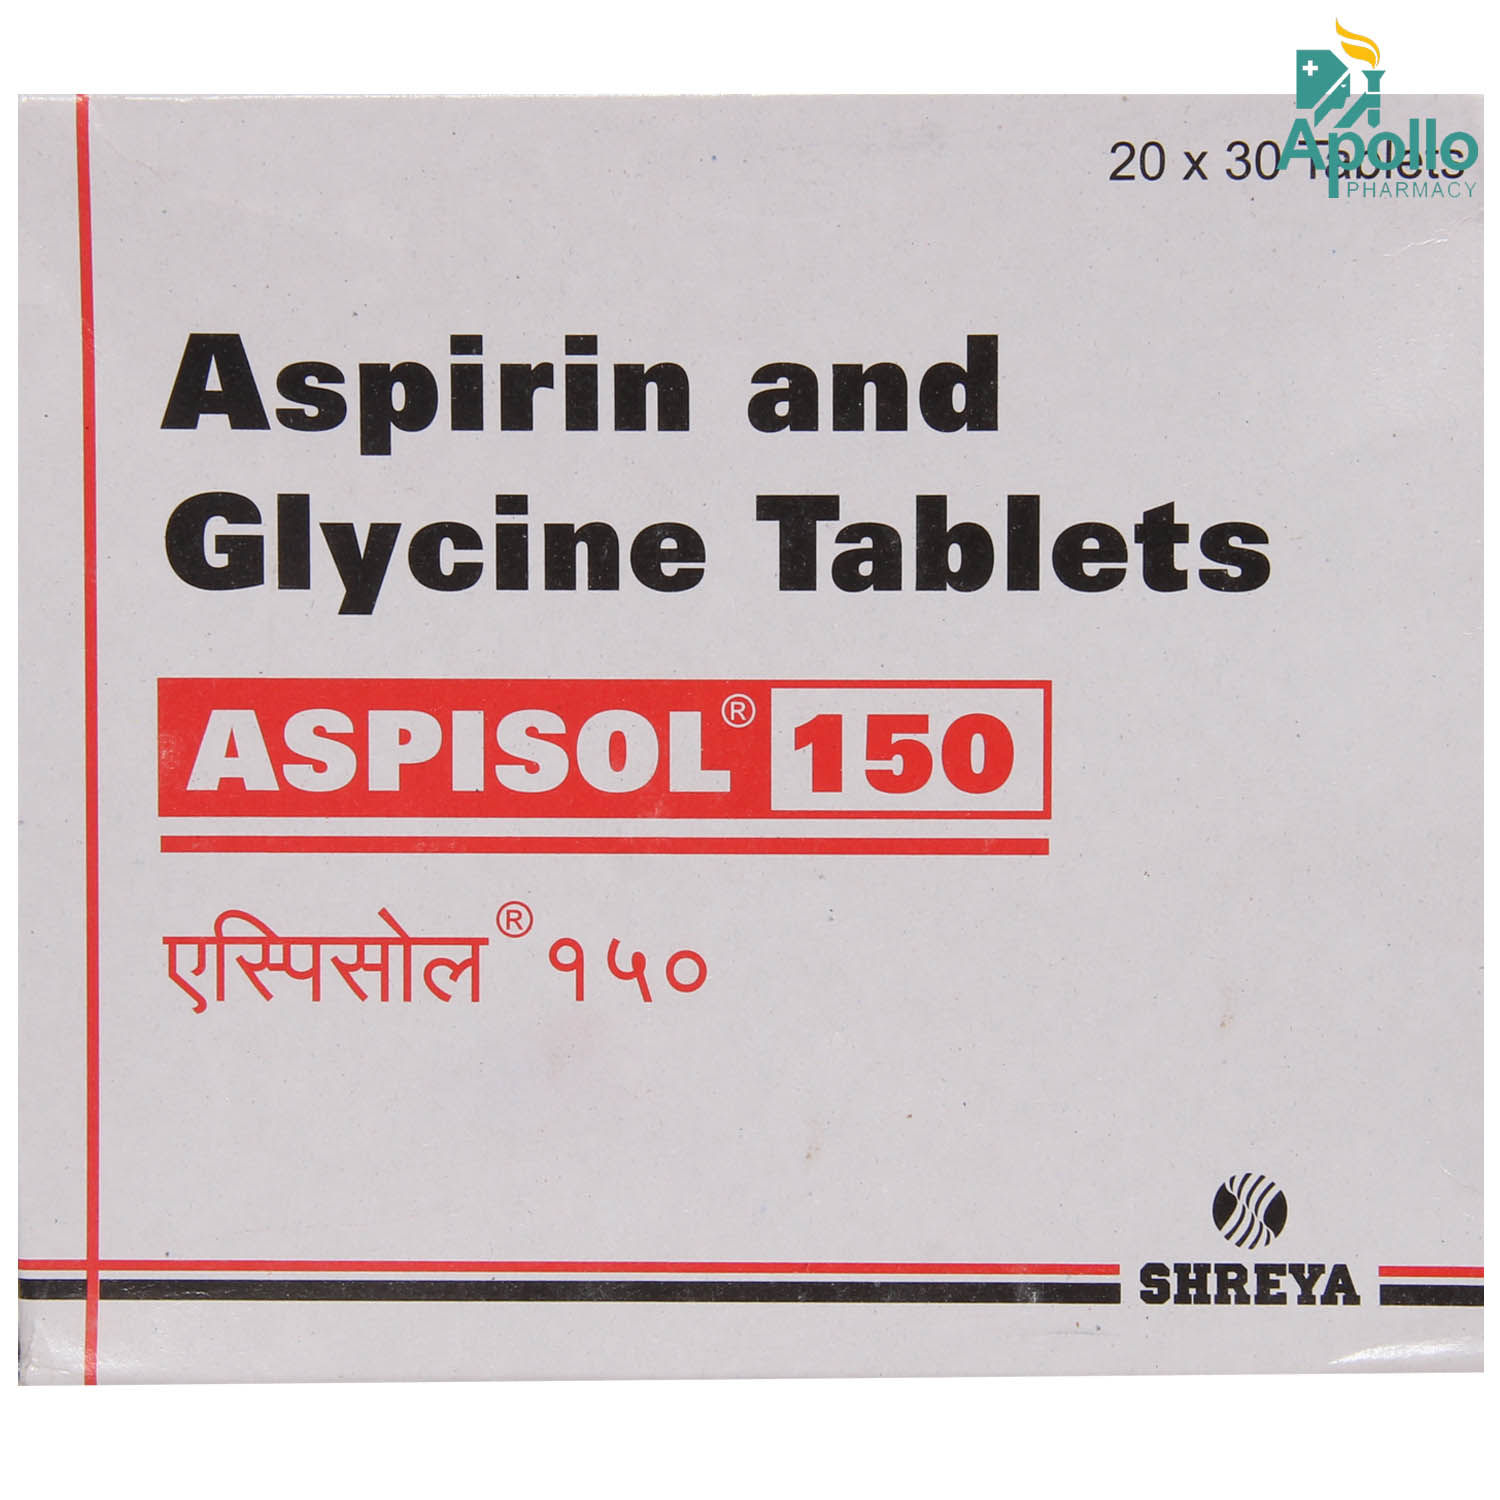 ASPISOL 150MG TABLET, Pack of 30 TABLETS